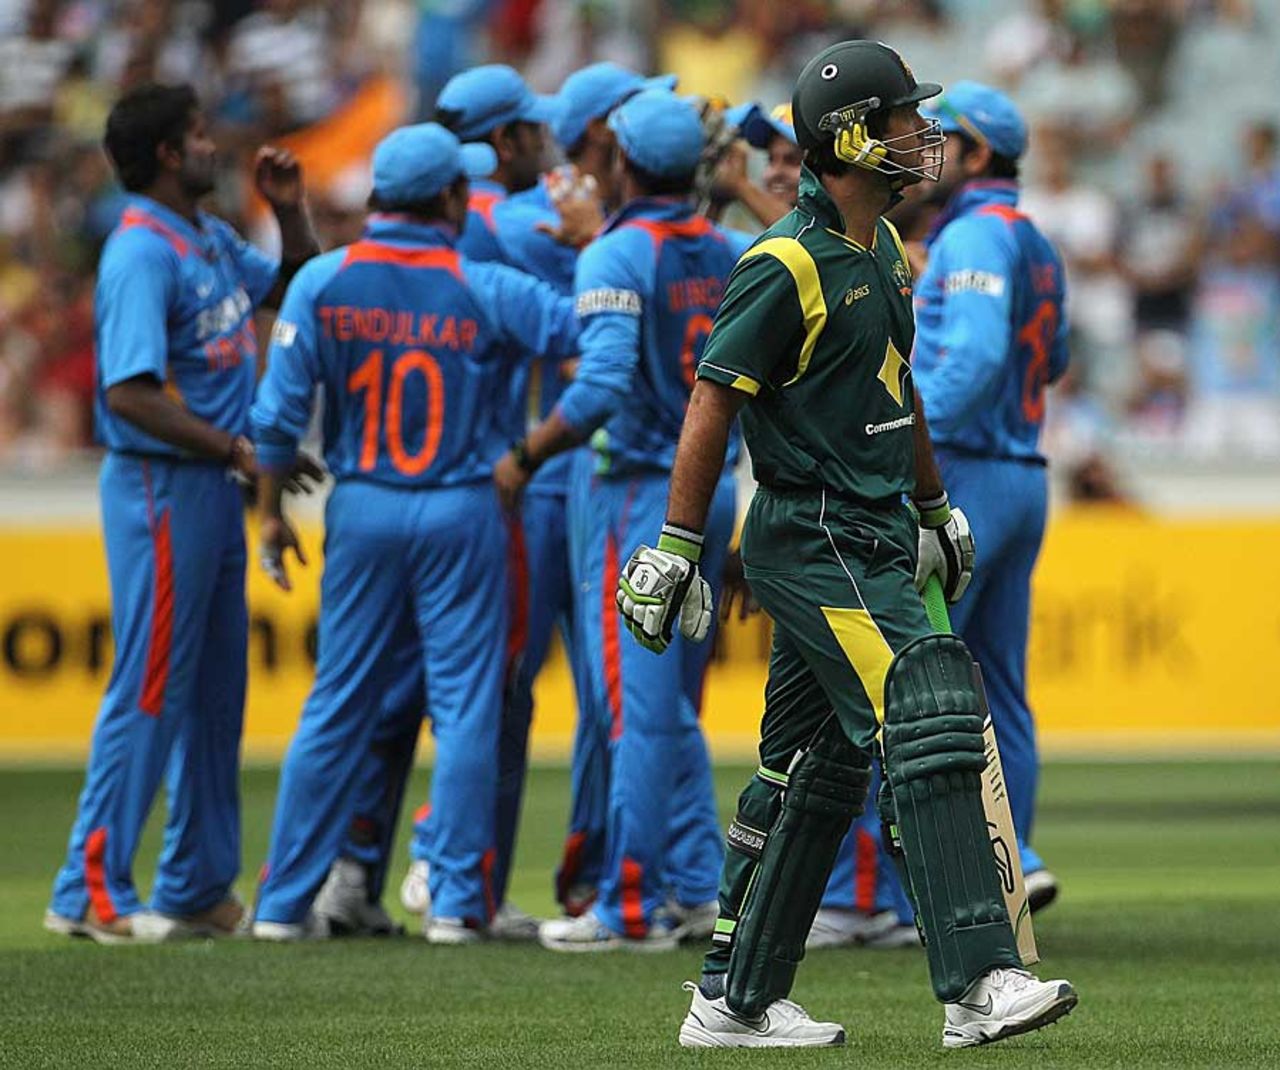 Ricky Ponting walks back after being dismissed, Australia v India, CB Series, 1st ODI, Melbourne, February 5, 2012